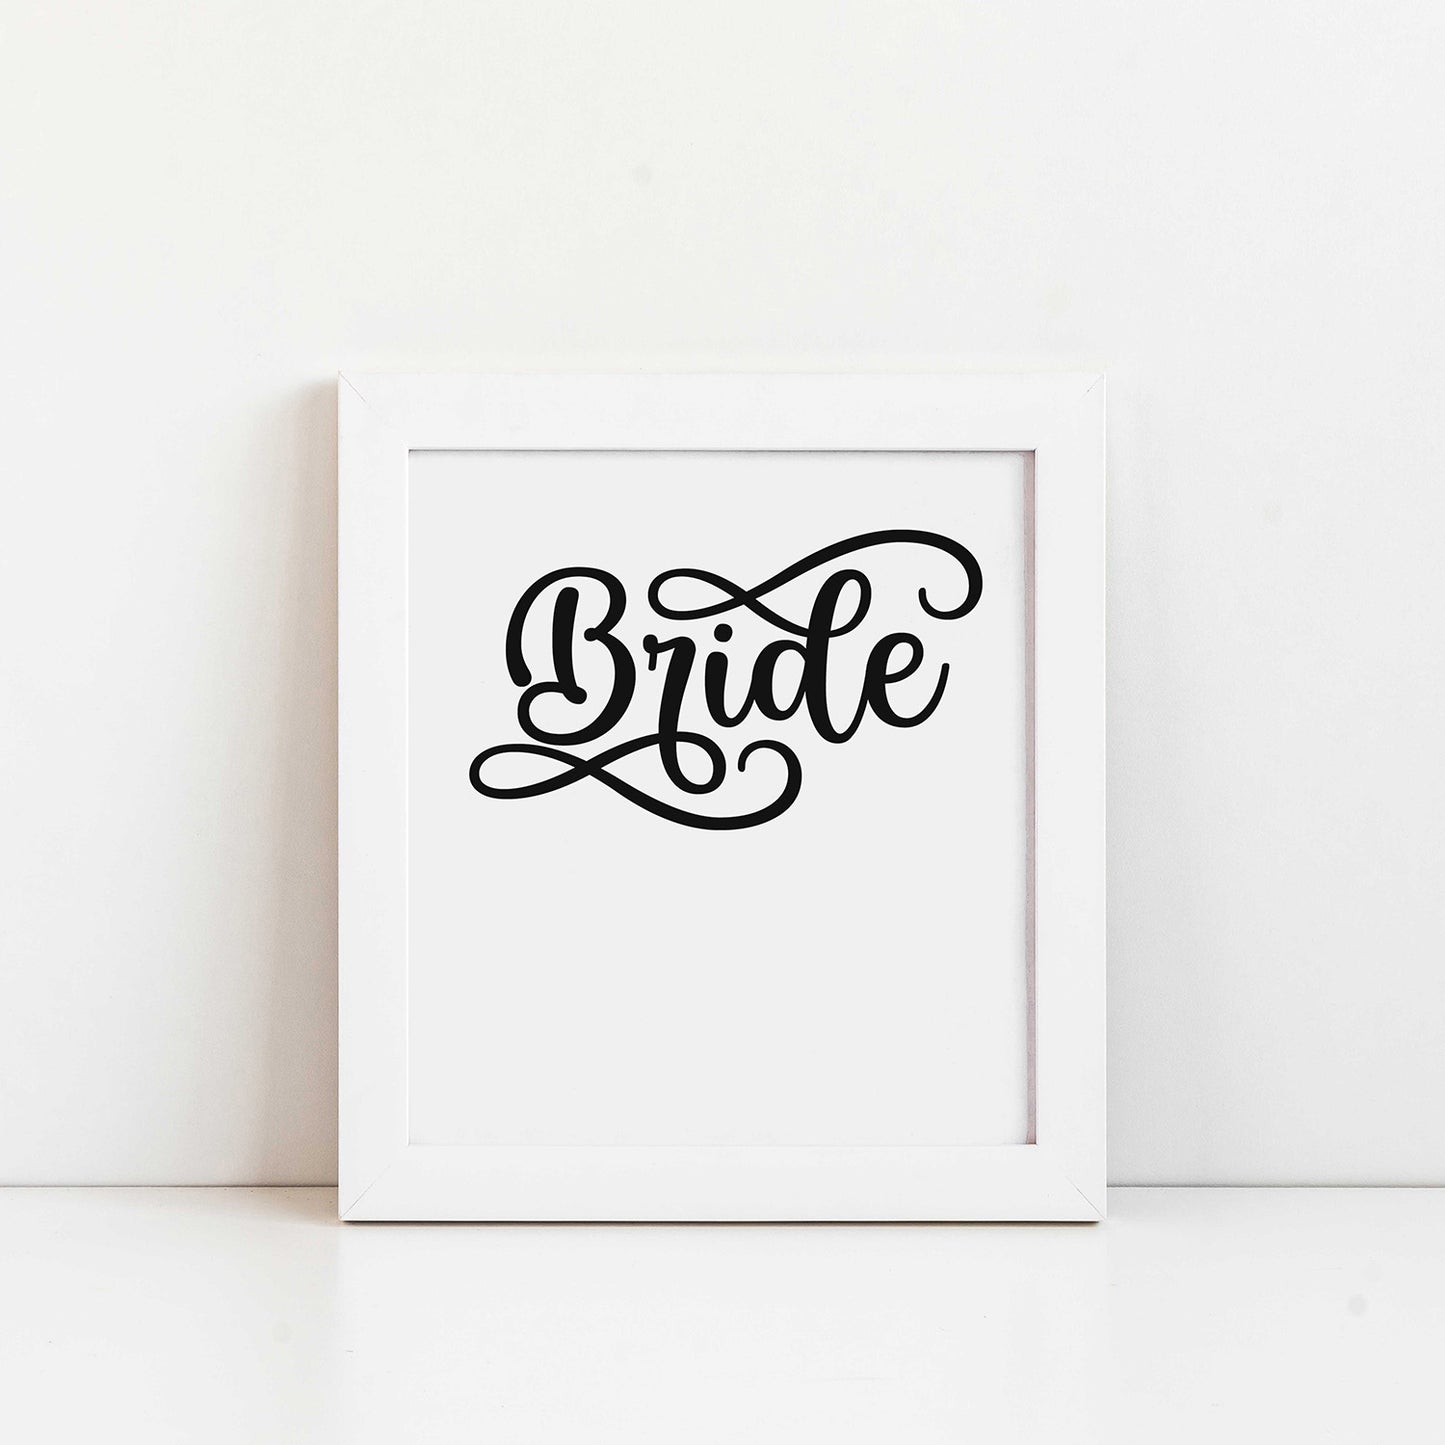 "Bride" Graphic